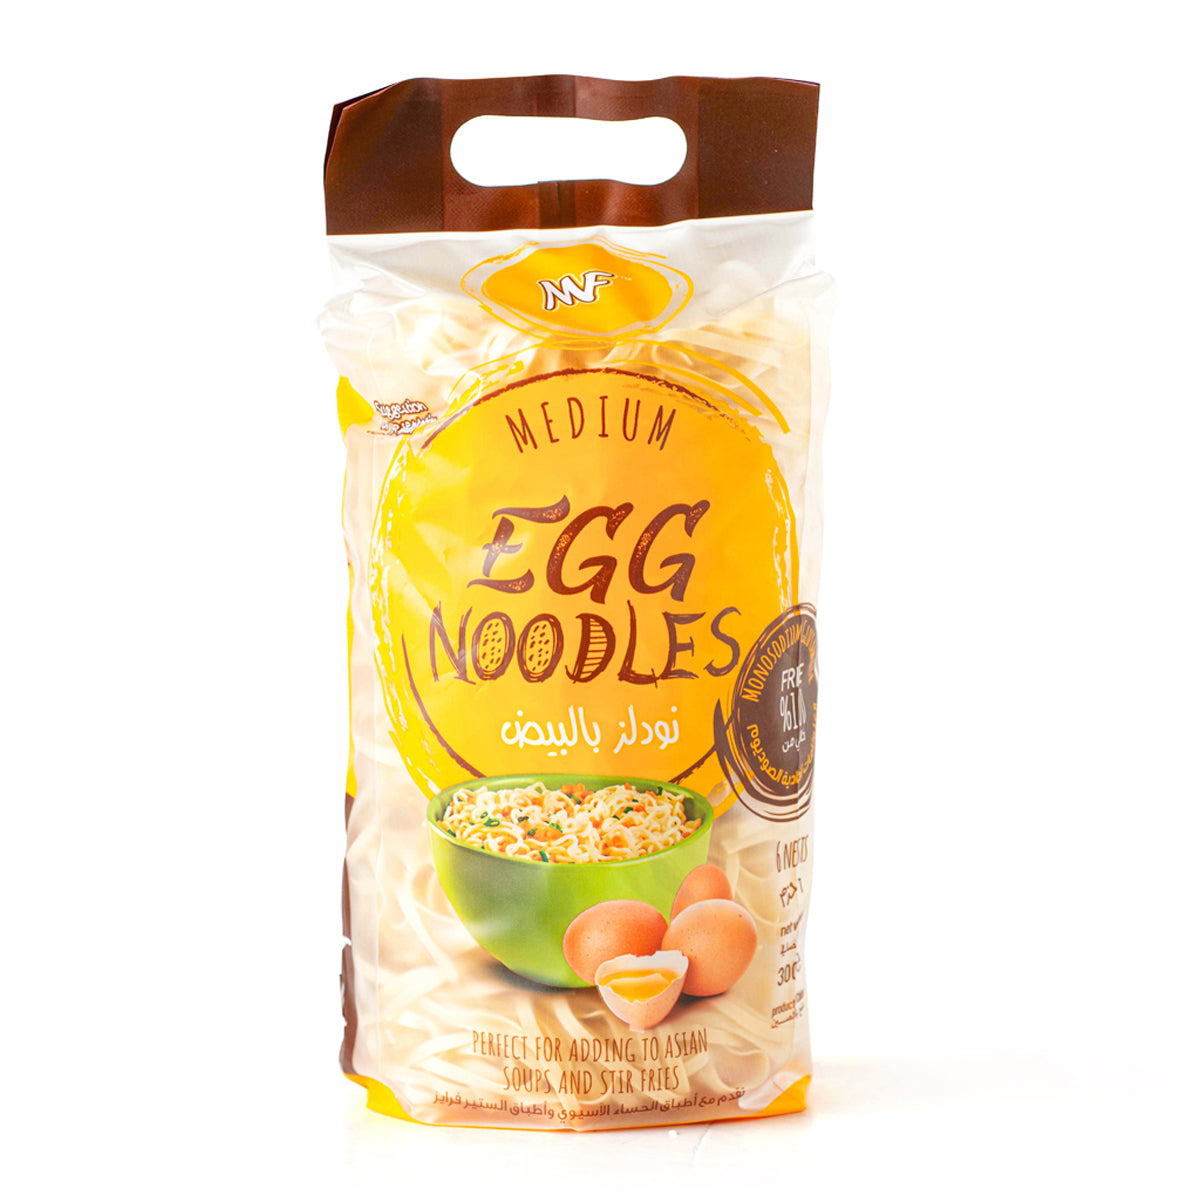 MF Medium Egg Noodles 300g